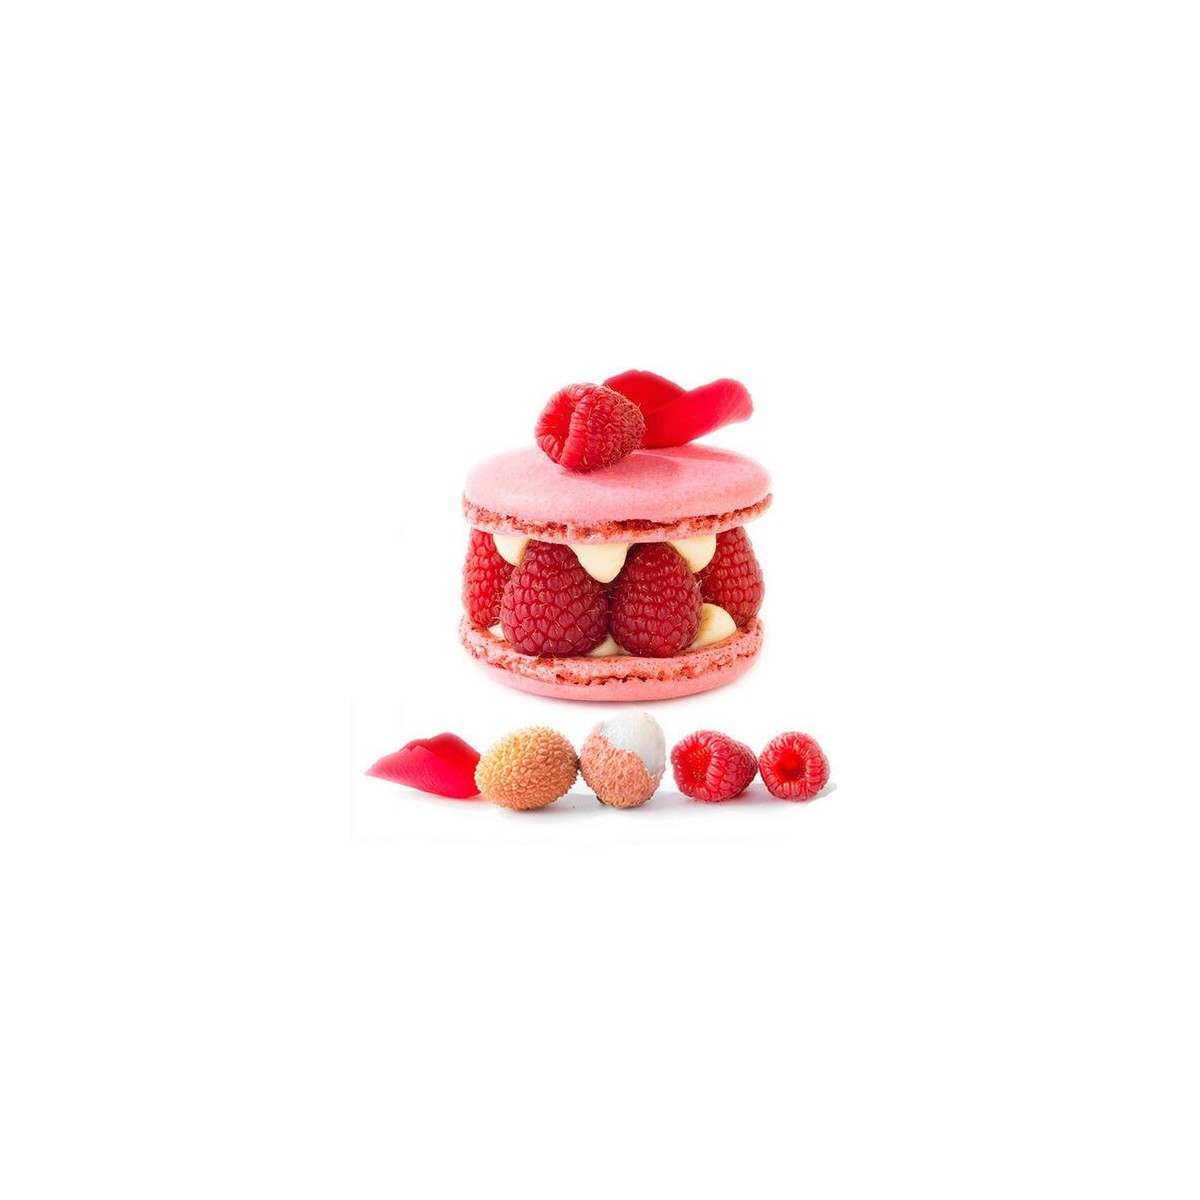 Macaron sucré Rose-Coeur Framboise Litchis dia : 8 cm 15x100gr